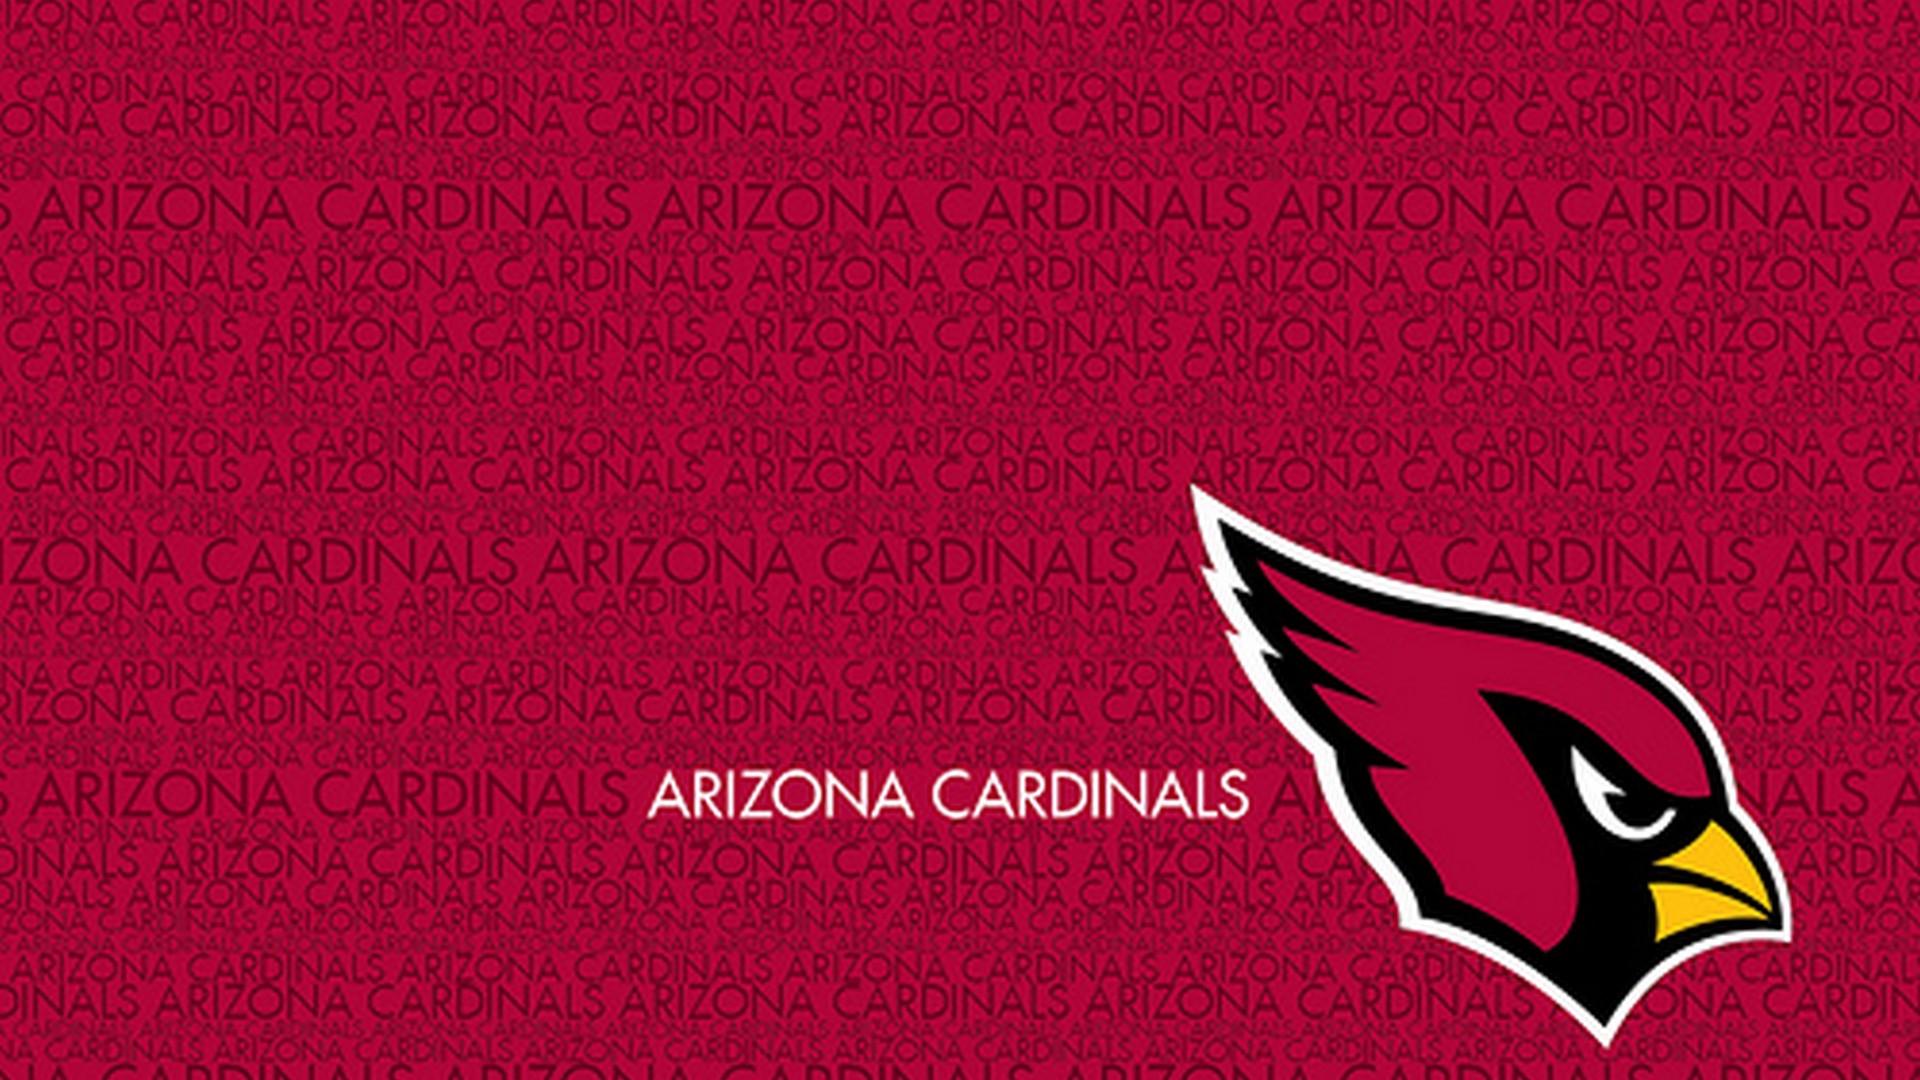 Arizona Cardinals For PC Wallpaper | 2019 NFL Football Wallpapers